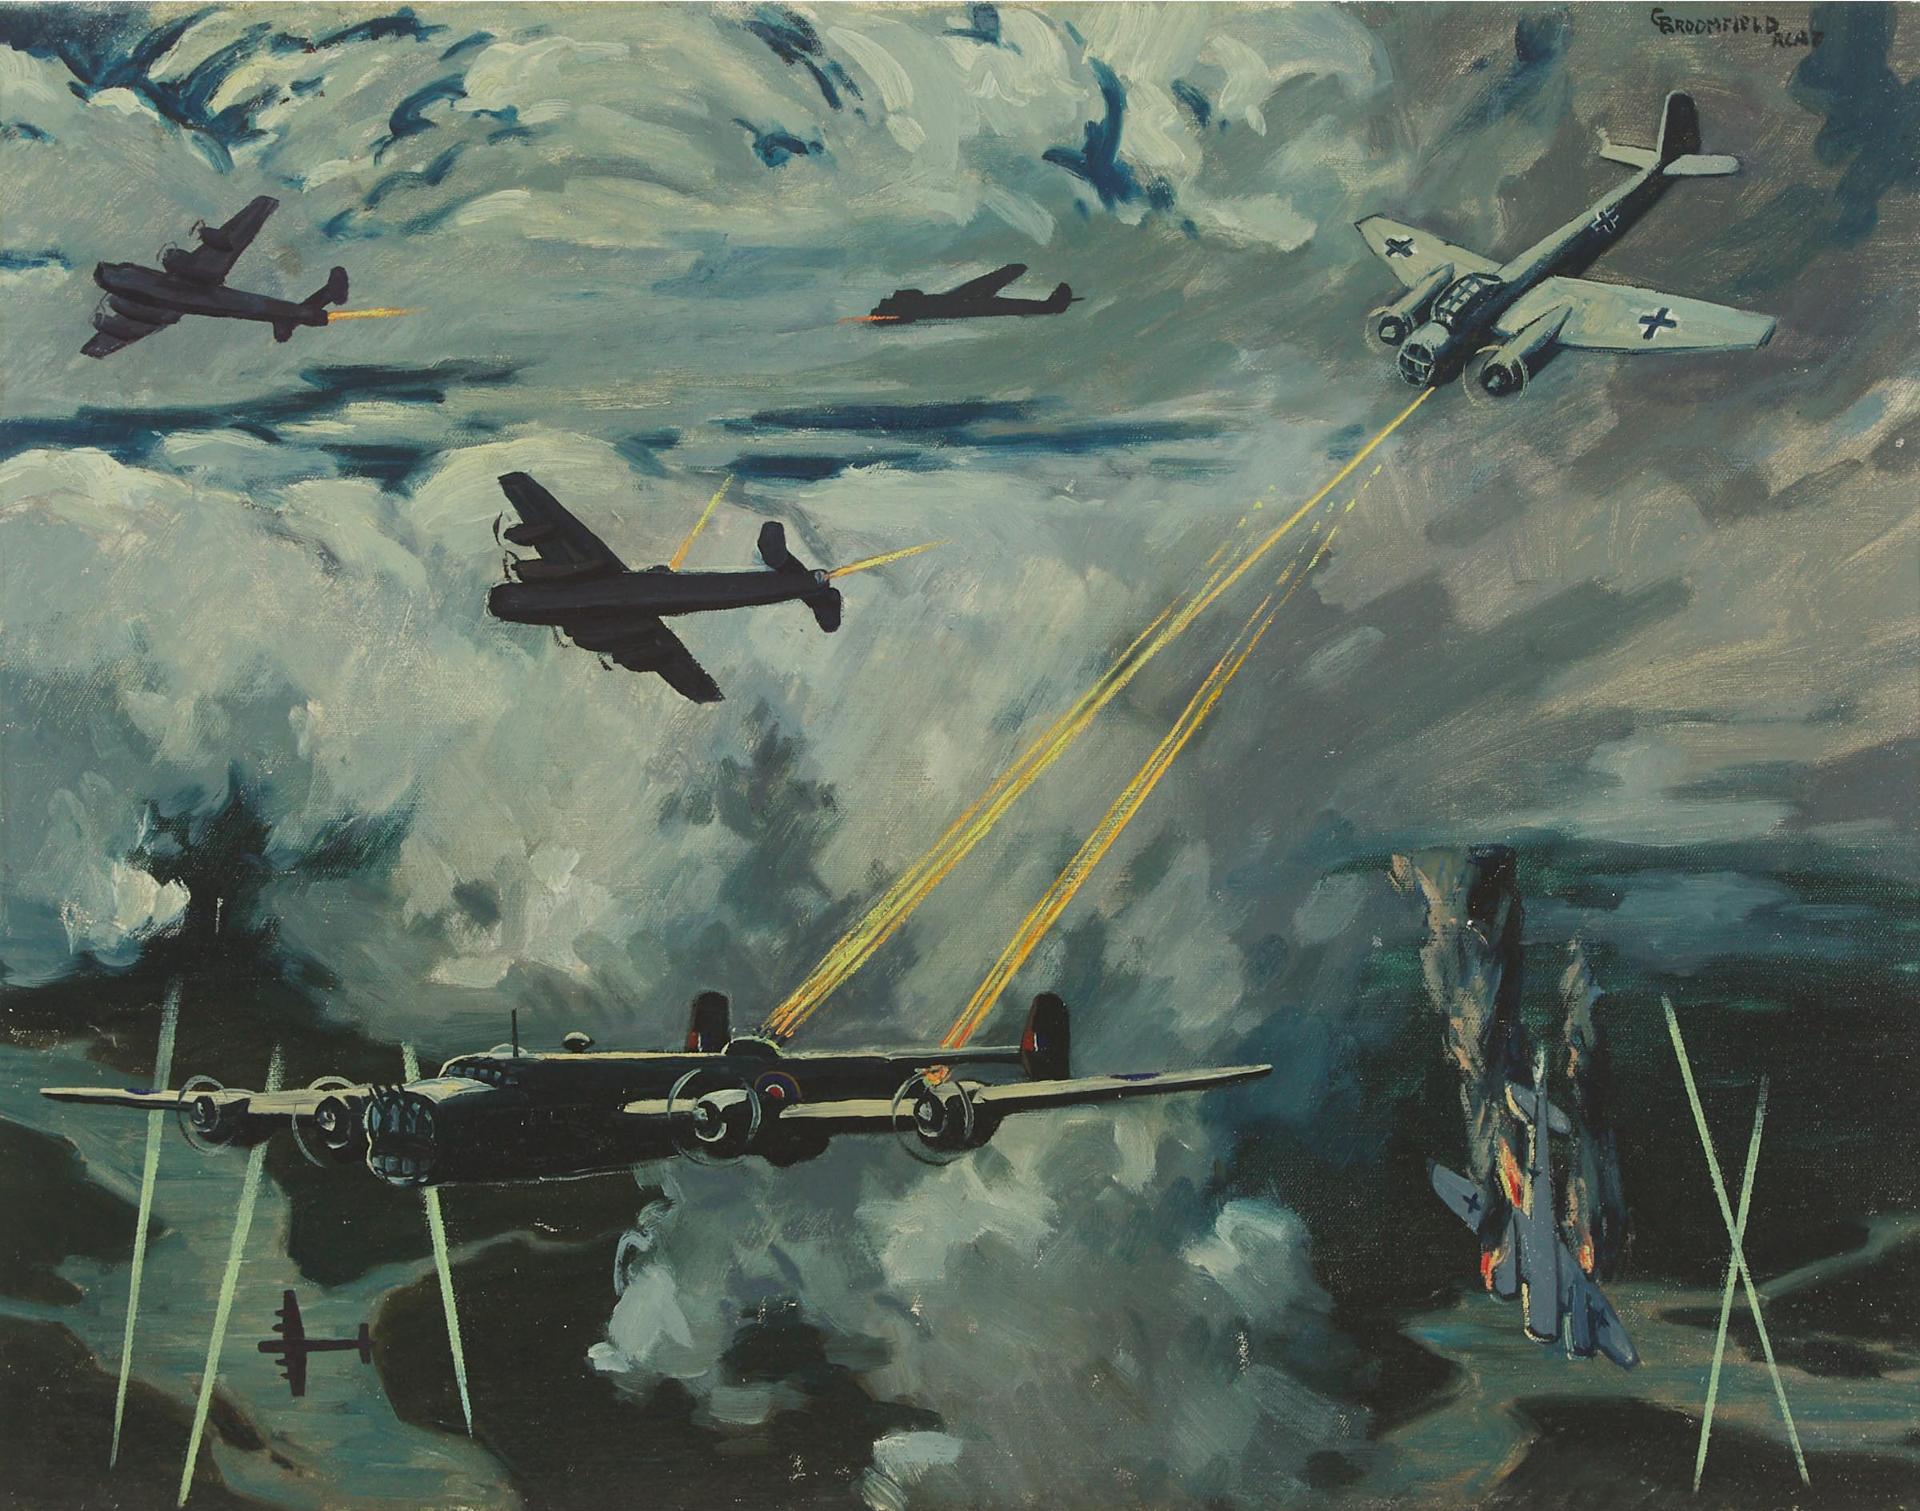 Adolphus George Broomfield (1906-1992) - Halifax Bombers (Rcaf) And J.U.88 Fighters, 1943